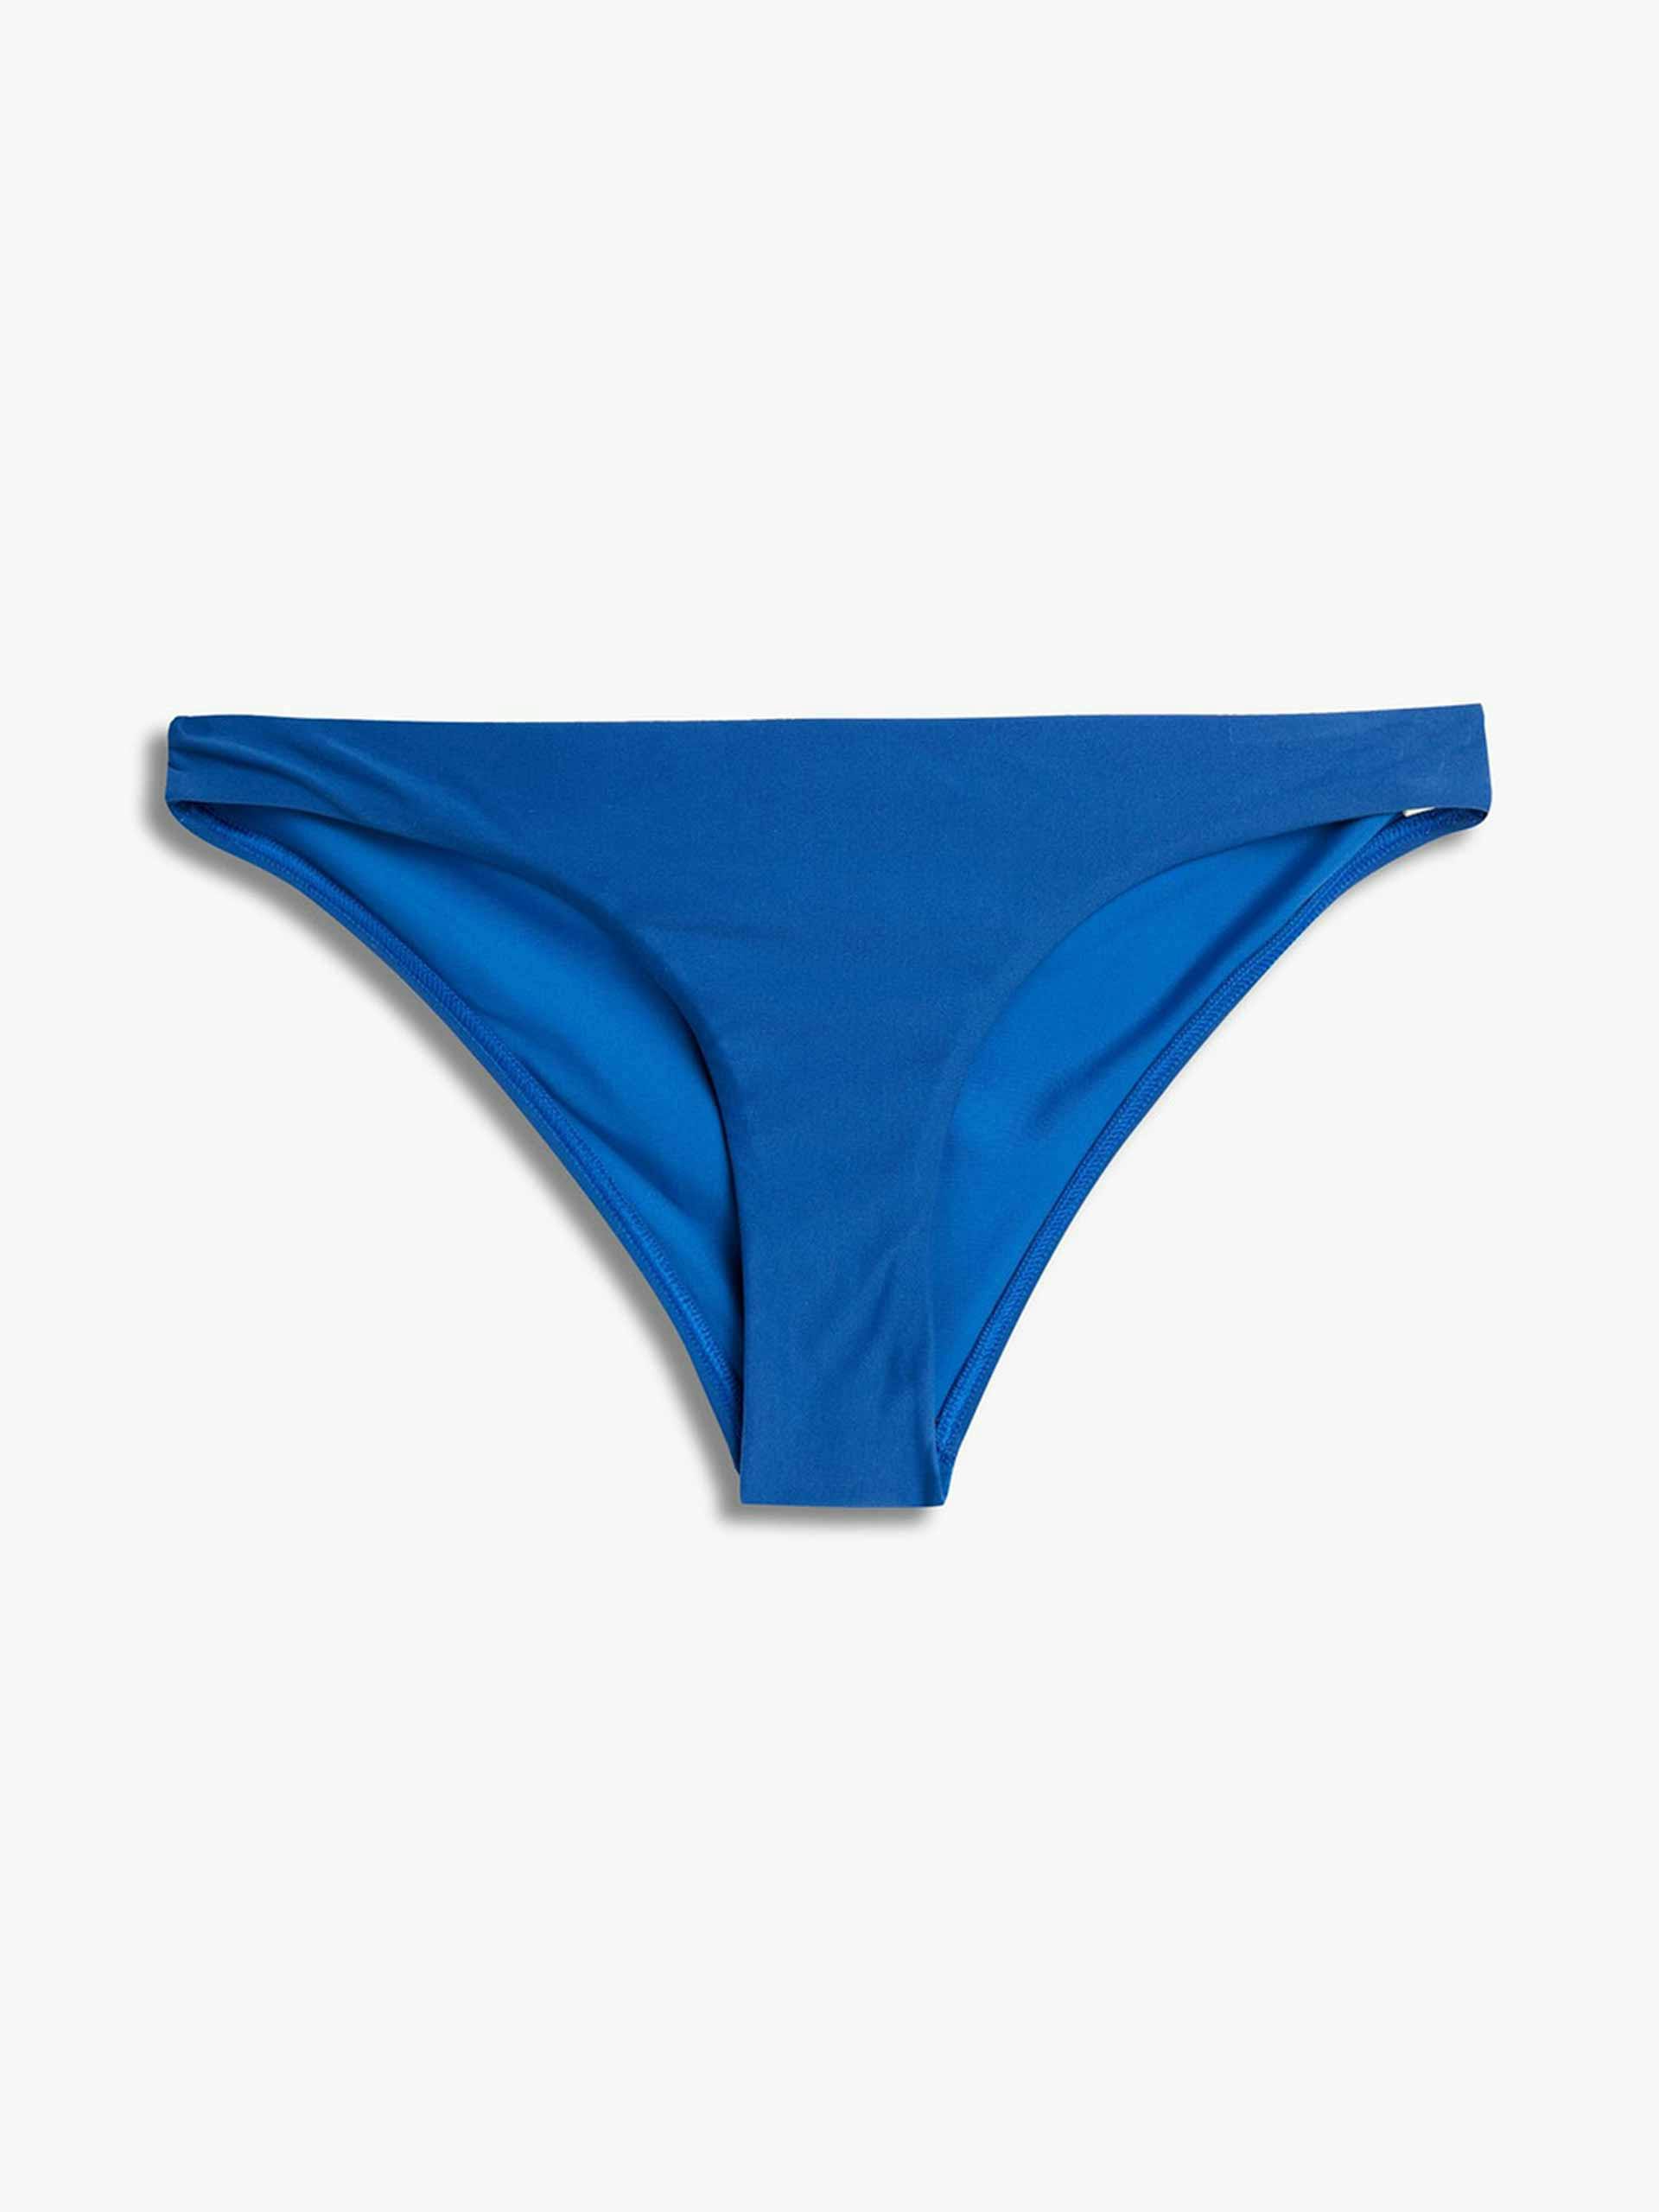 Blue low-rise bikini briefs